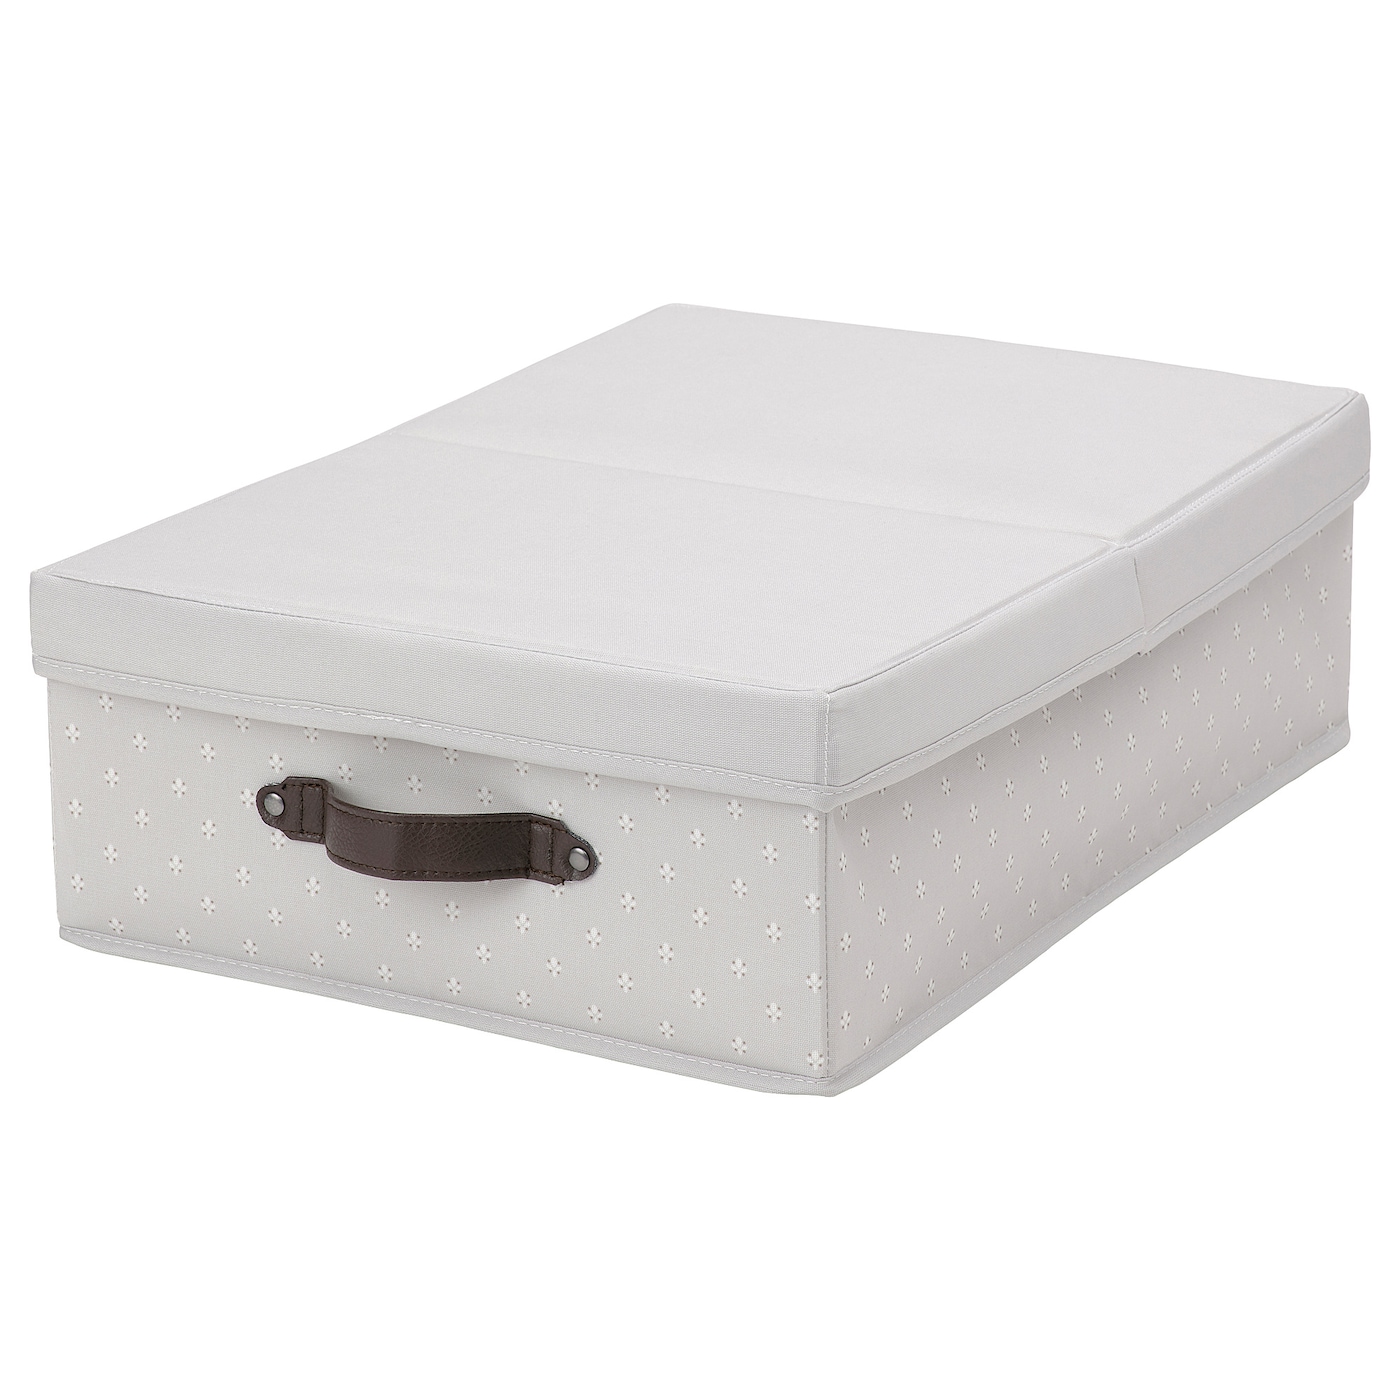 BLÄDDRARE БЛЭДДРАРЕ Коробка с крышкой, серый/с рисунком, 35x50x15 см IKEA цена и фото